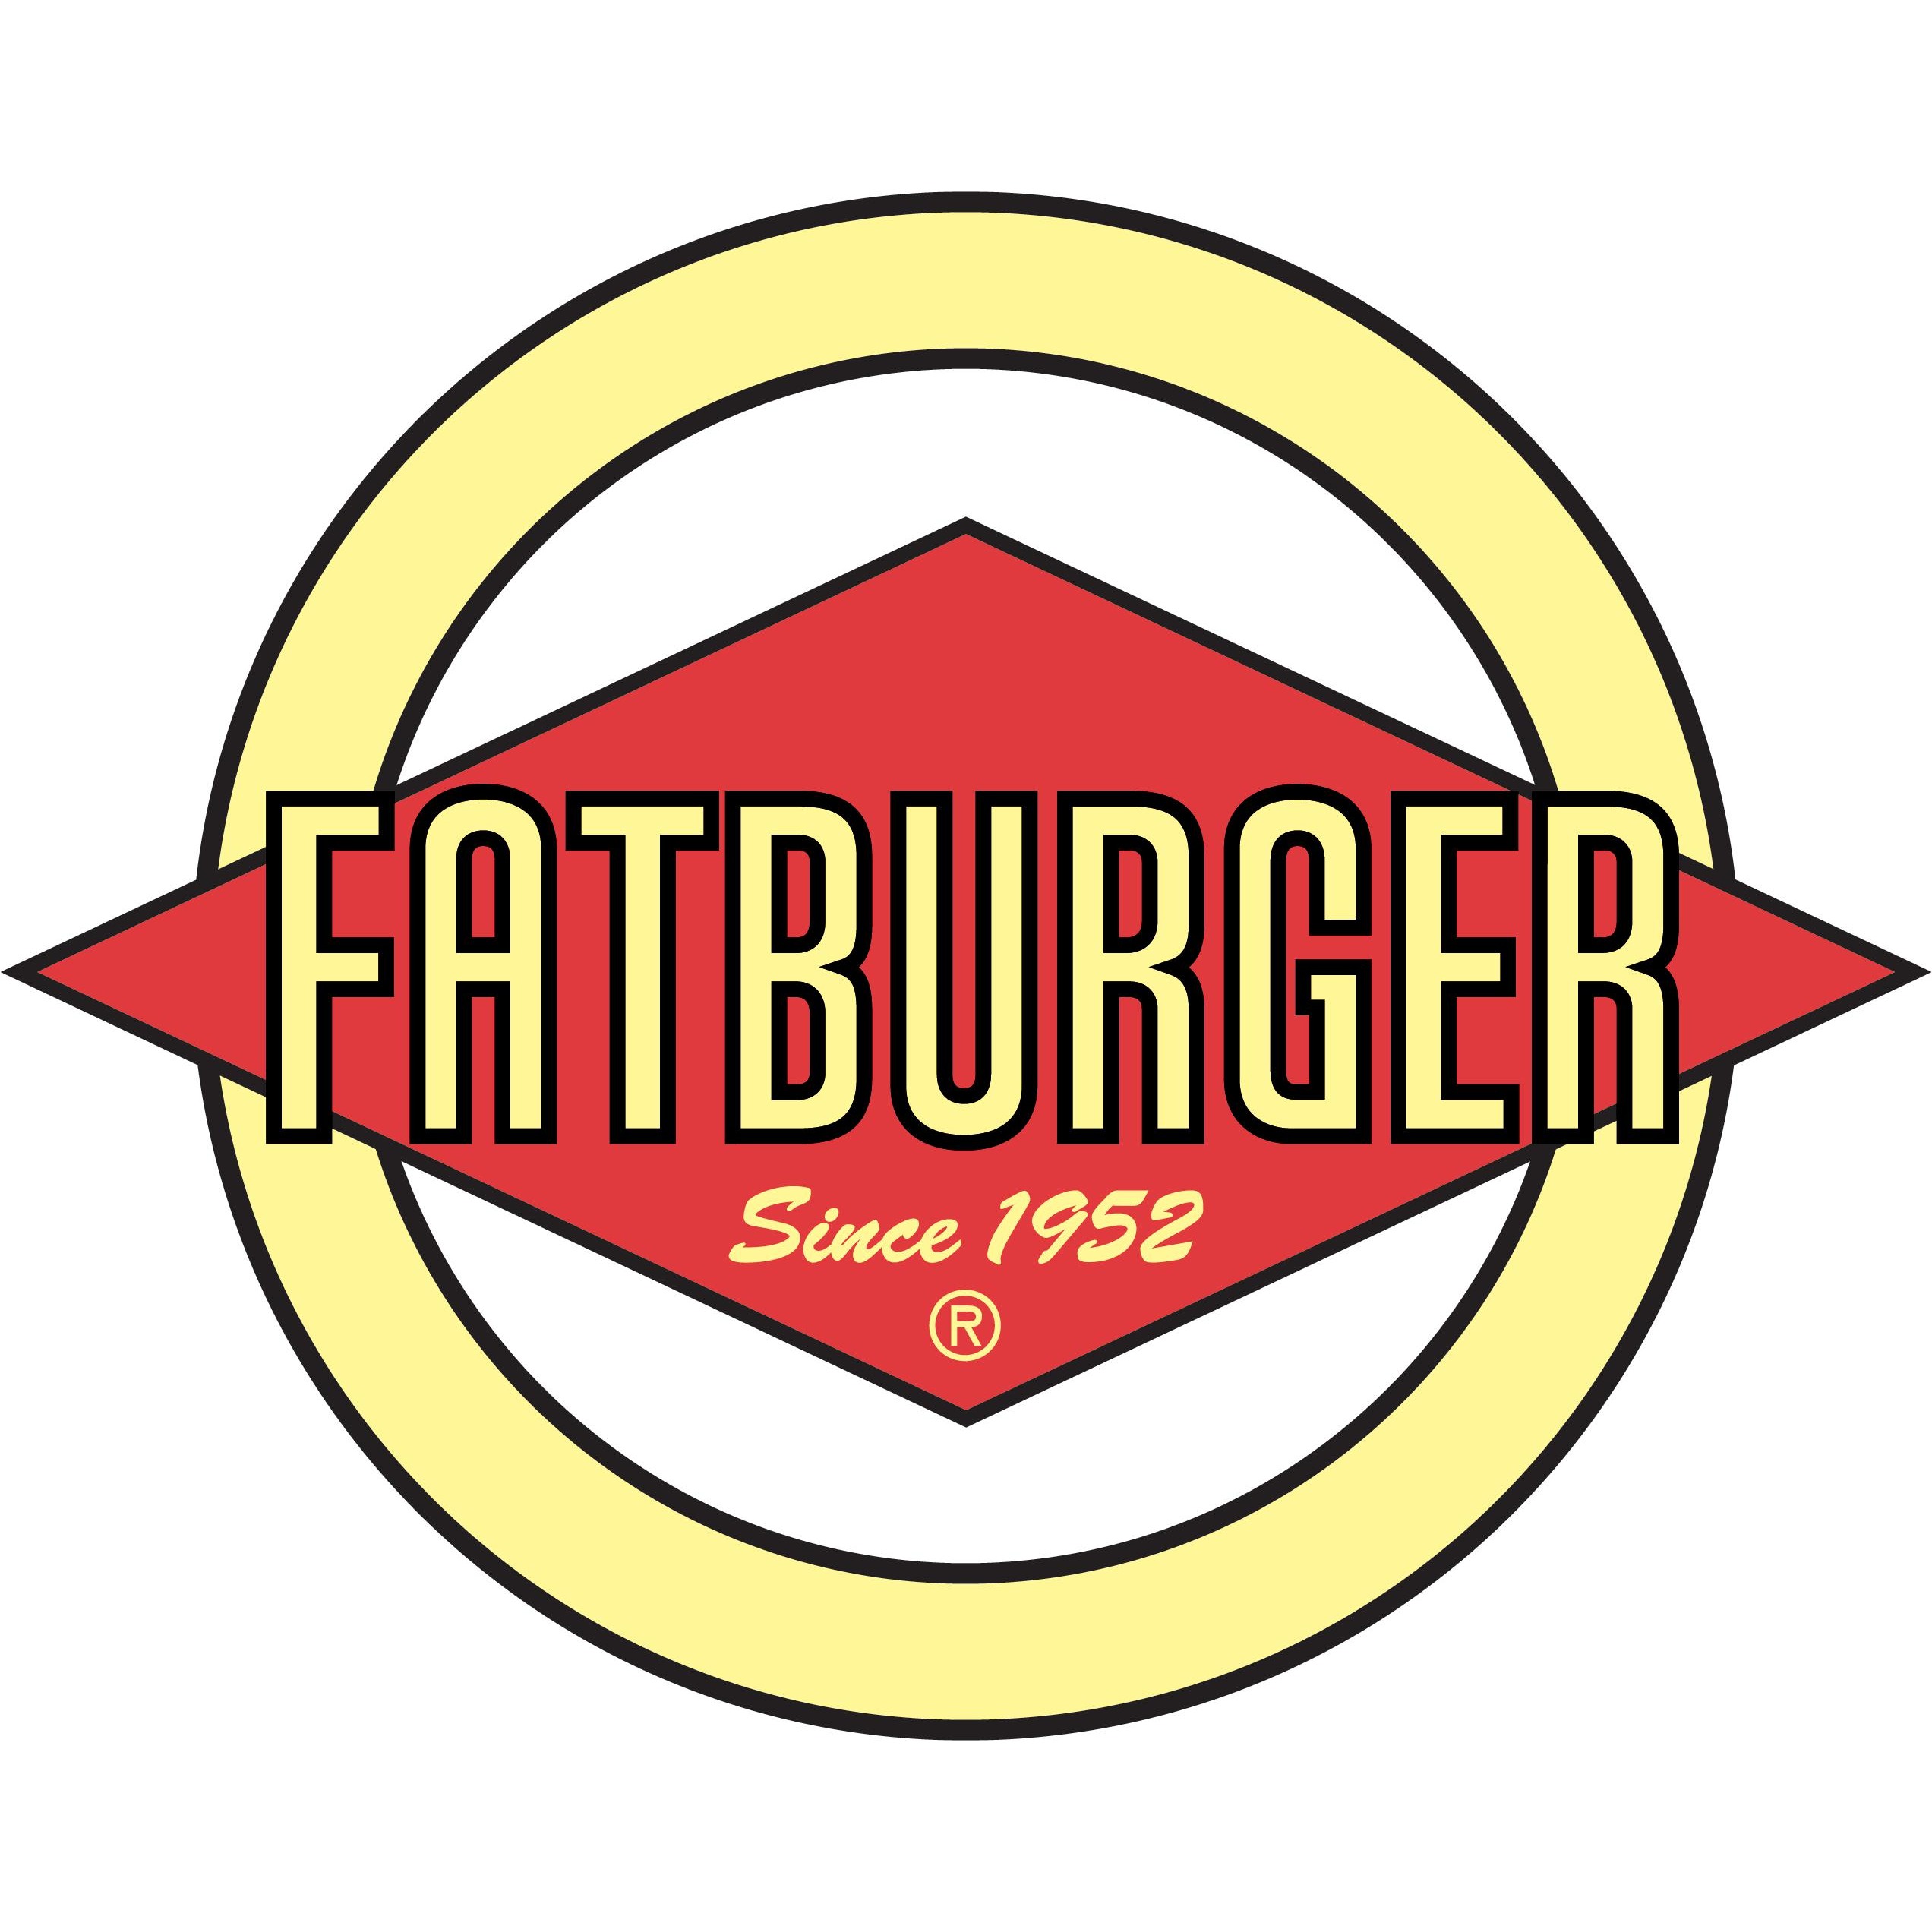 Fatburger Photo